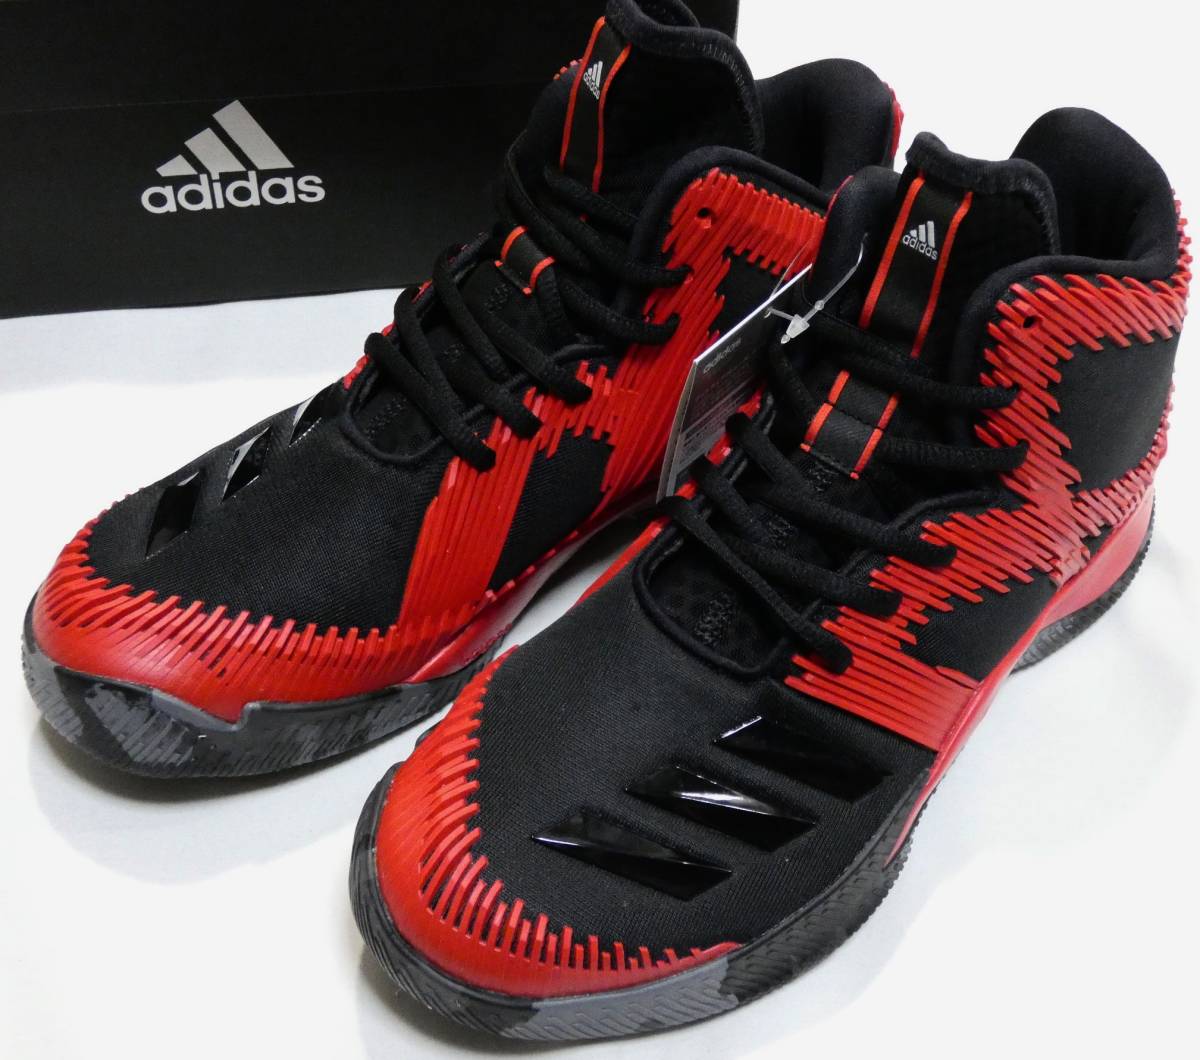 Melancolía condón espía regular price 14,580 jpy Adidas SPG basketball shoes BB8188 black red  23.5.: Real Yahoo auction salling